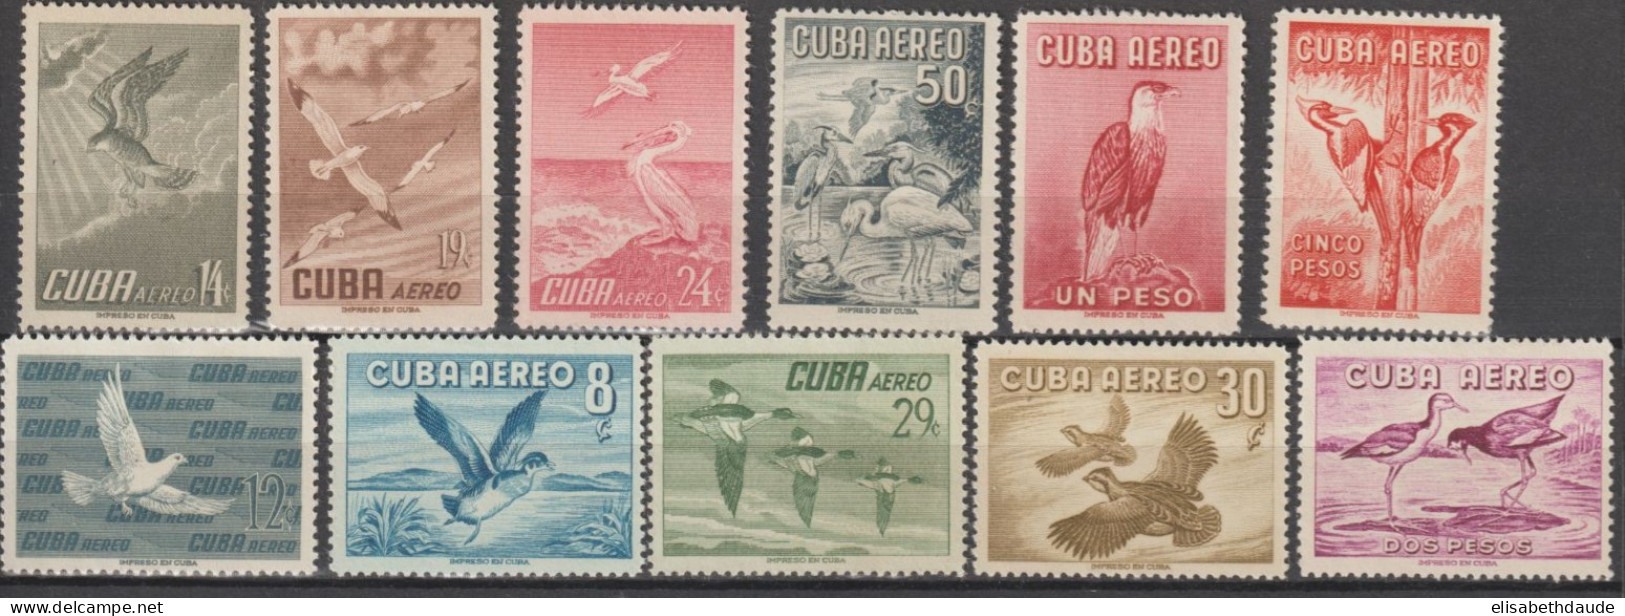 C UBA - 1957 - POSTE AERIENNE - SERIE COMPLETE OISEAUX / BIRDS YVERT N°135/145 ** / * MNH / MLH - COTE YVERT = 90 EUR - Luchtpost